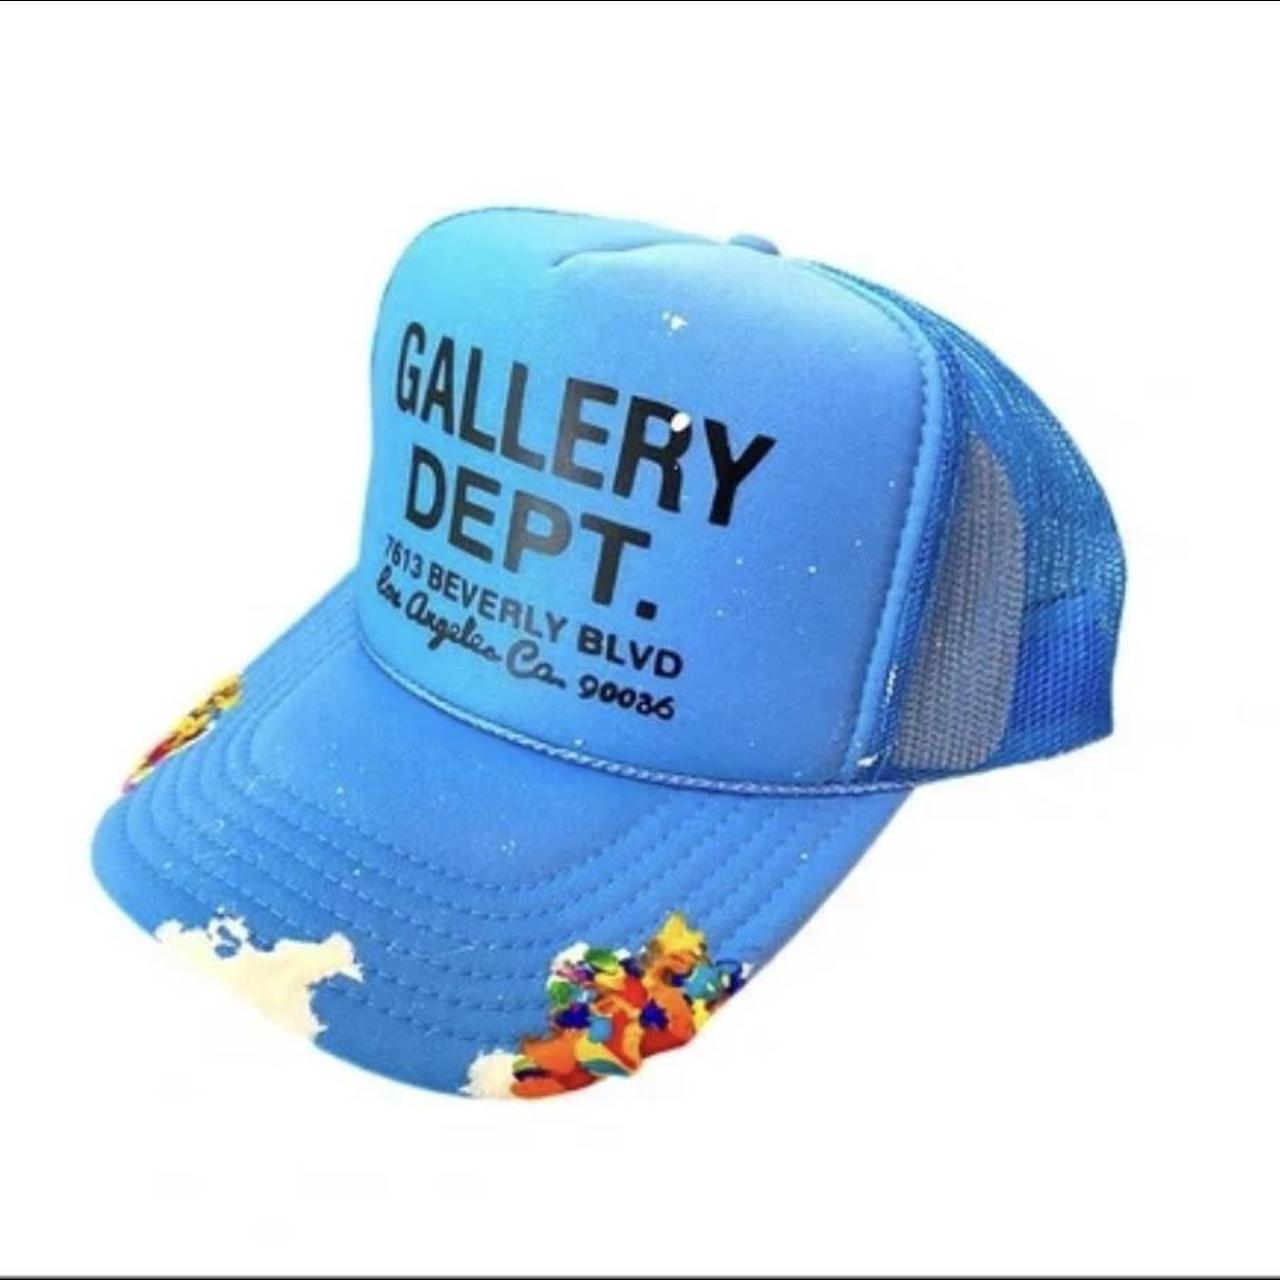 GALLERY DEPT. TRUCKER HAT All orders placed - Depop